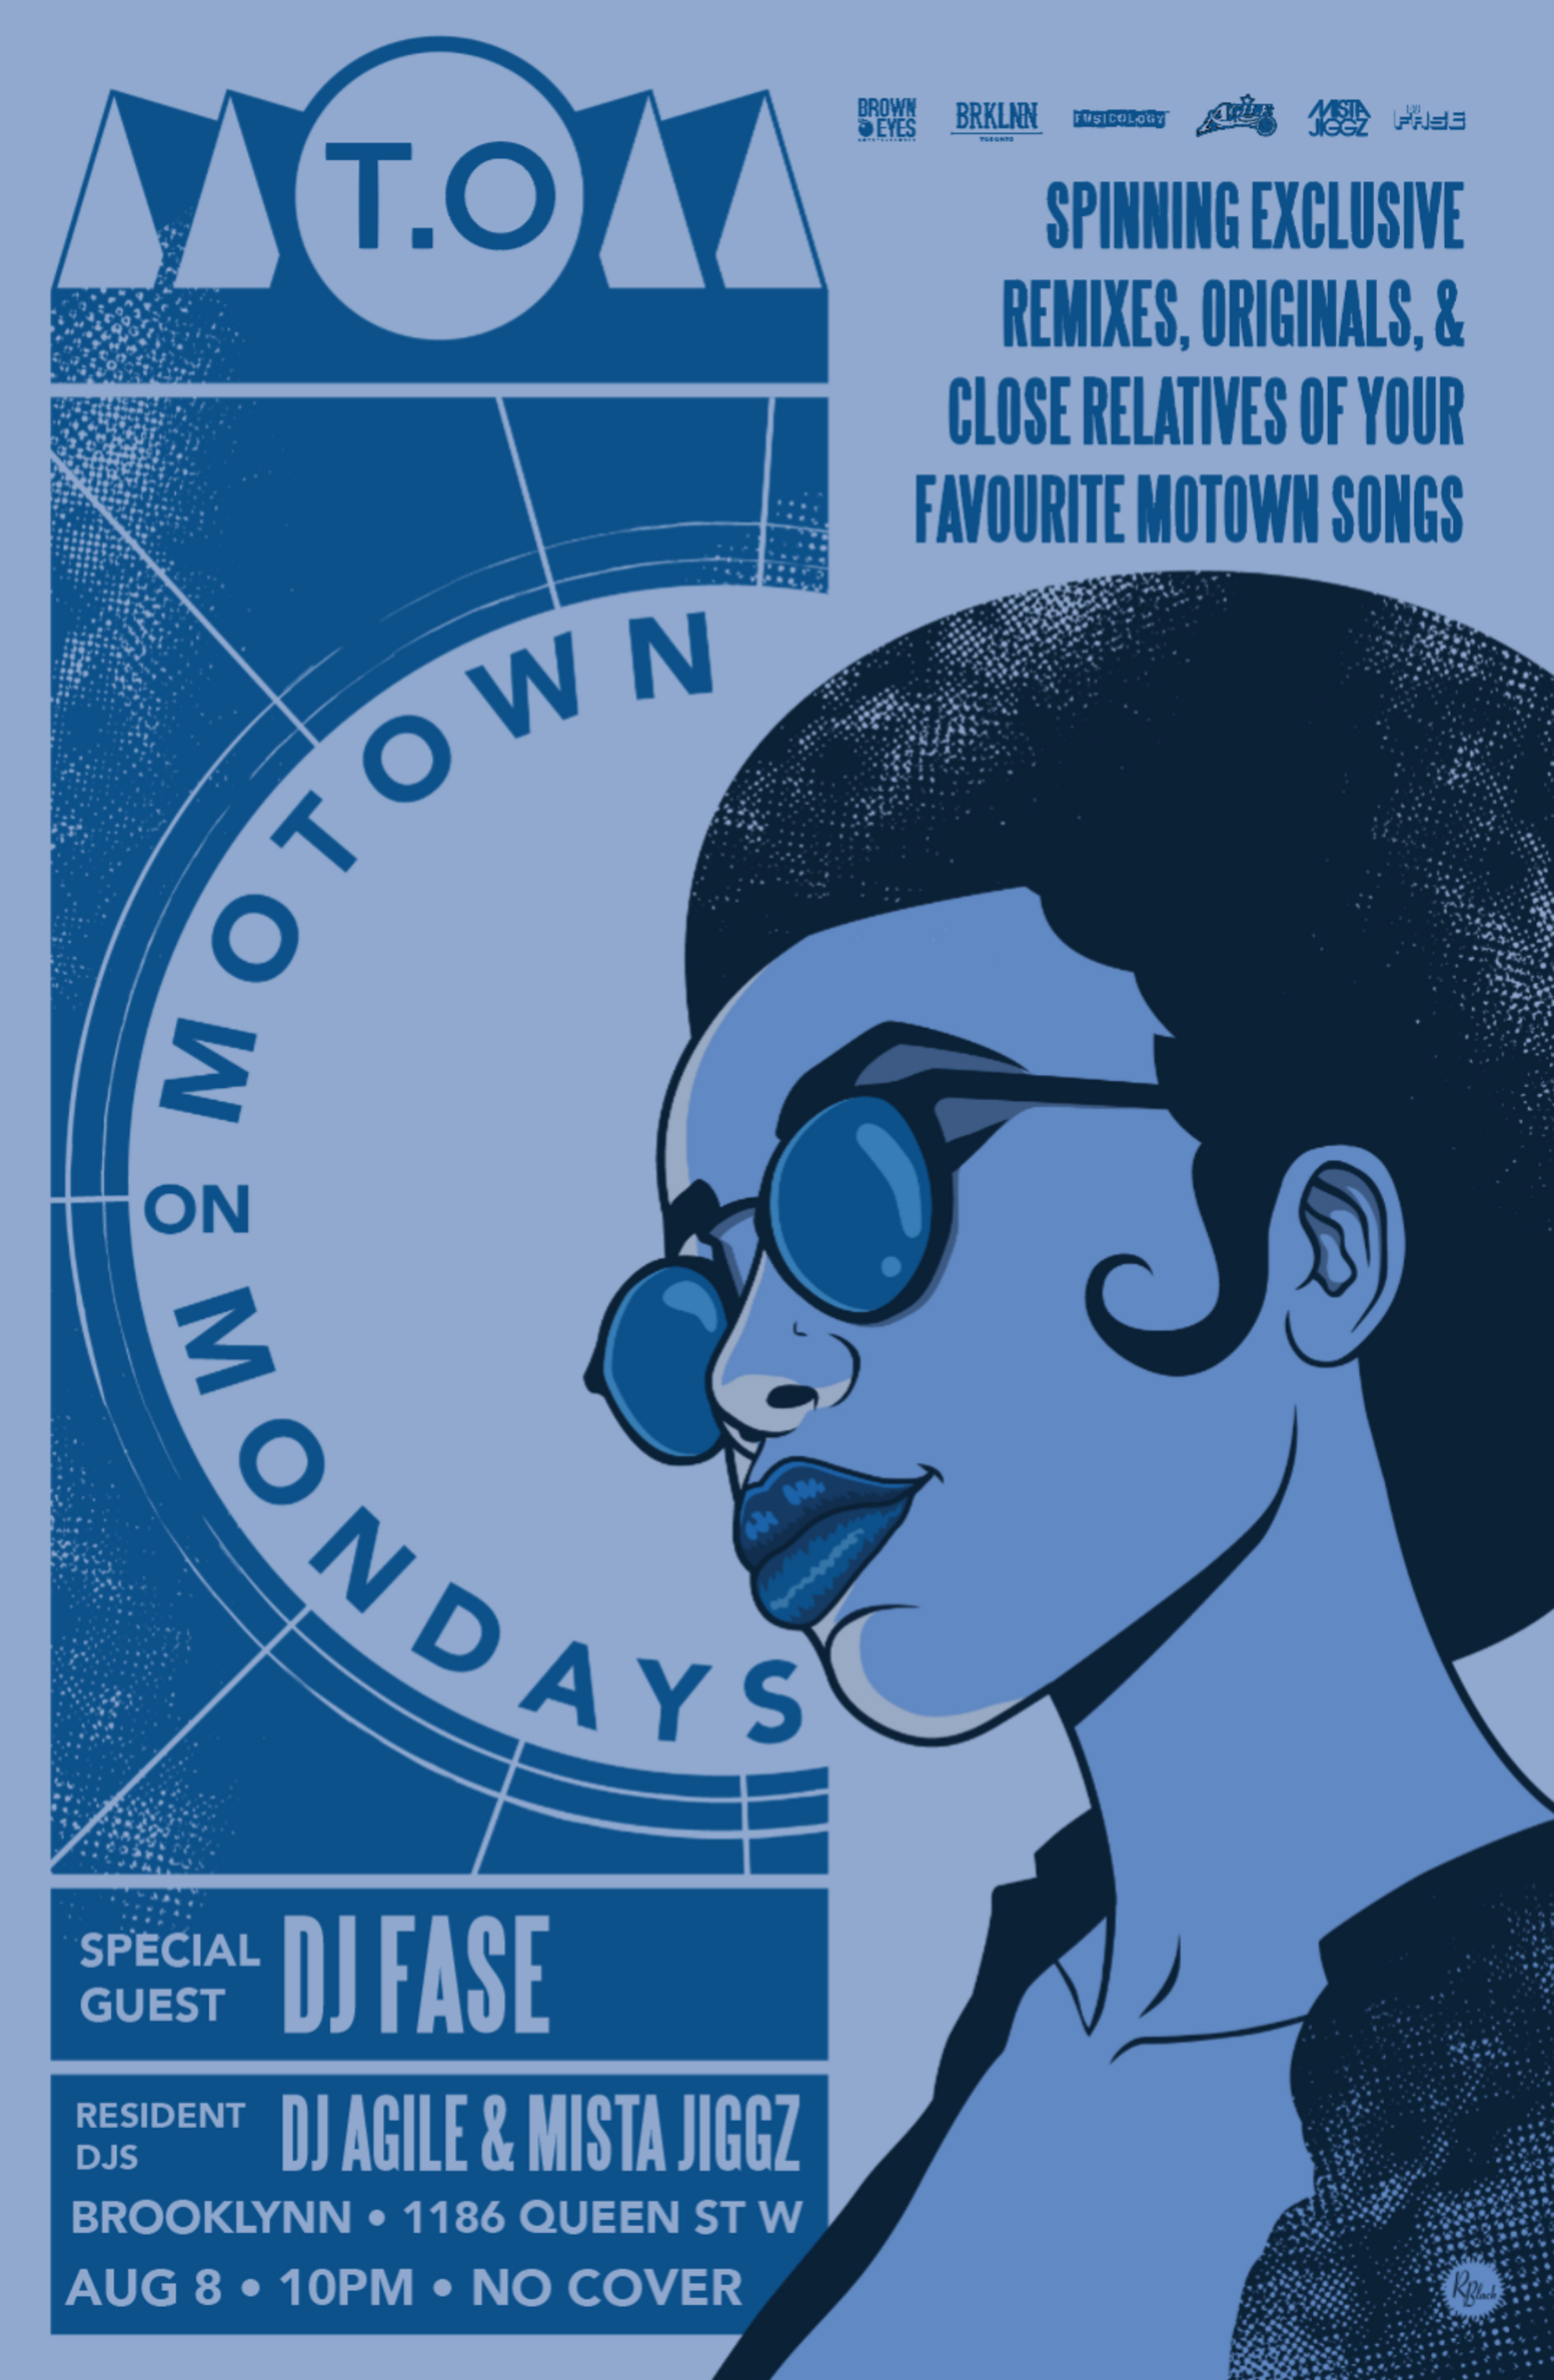 Motown on Mondays Toronto Pop Up